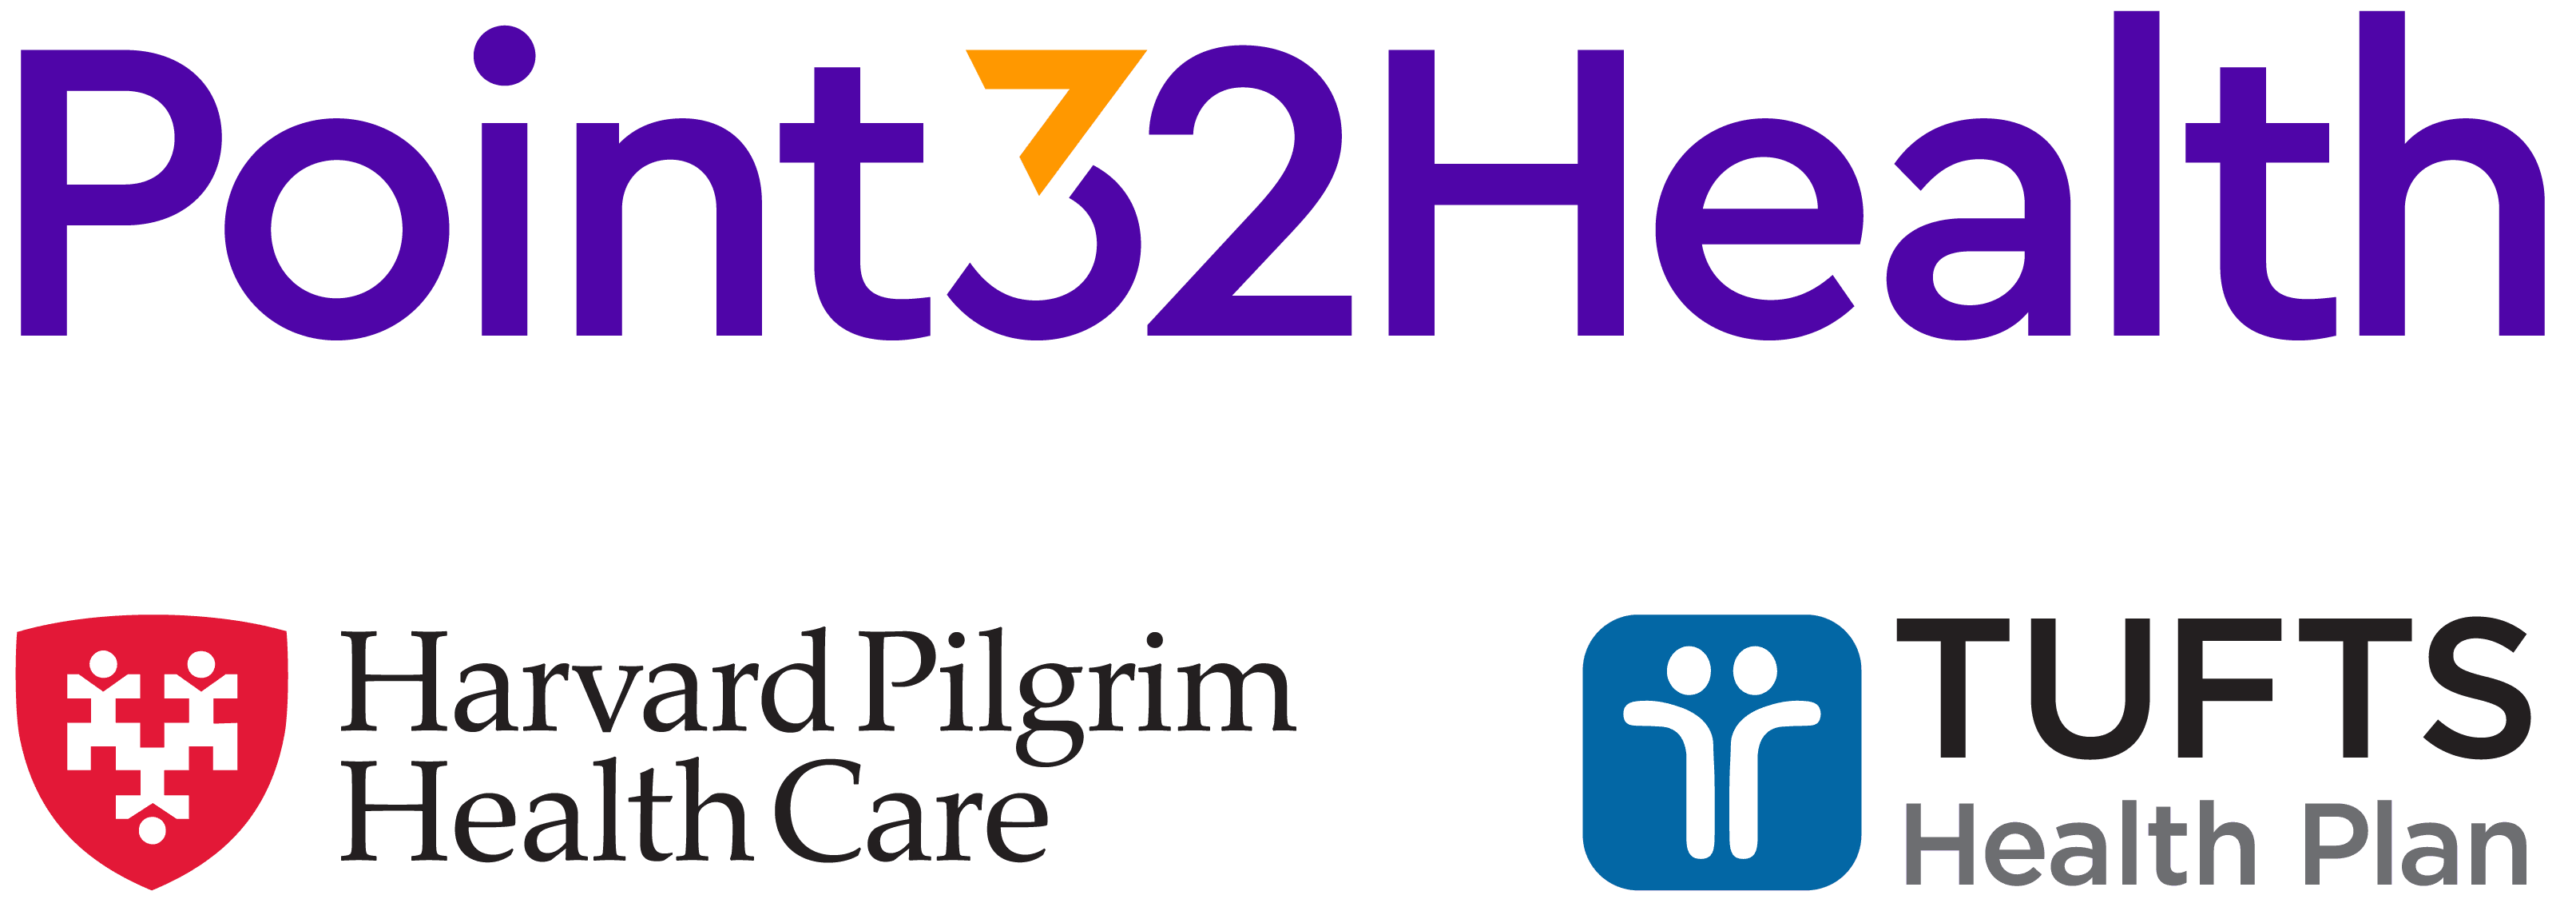 Luminary sponsor logos: Point32 Health, Harvard Pilgrim Health Care, Tufts Health Plan